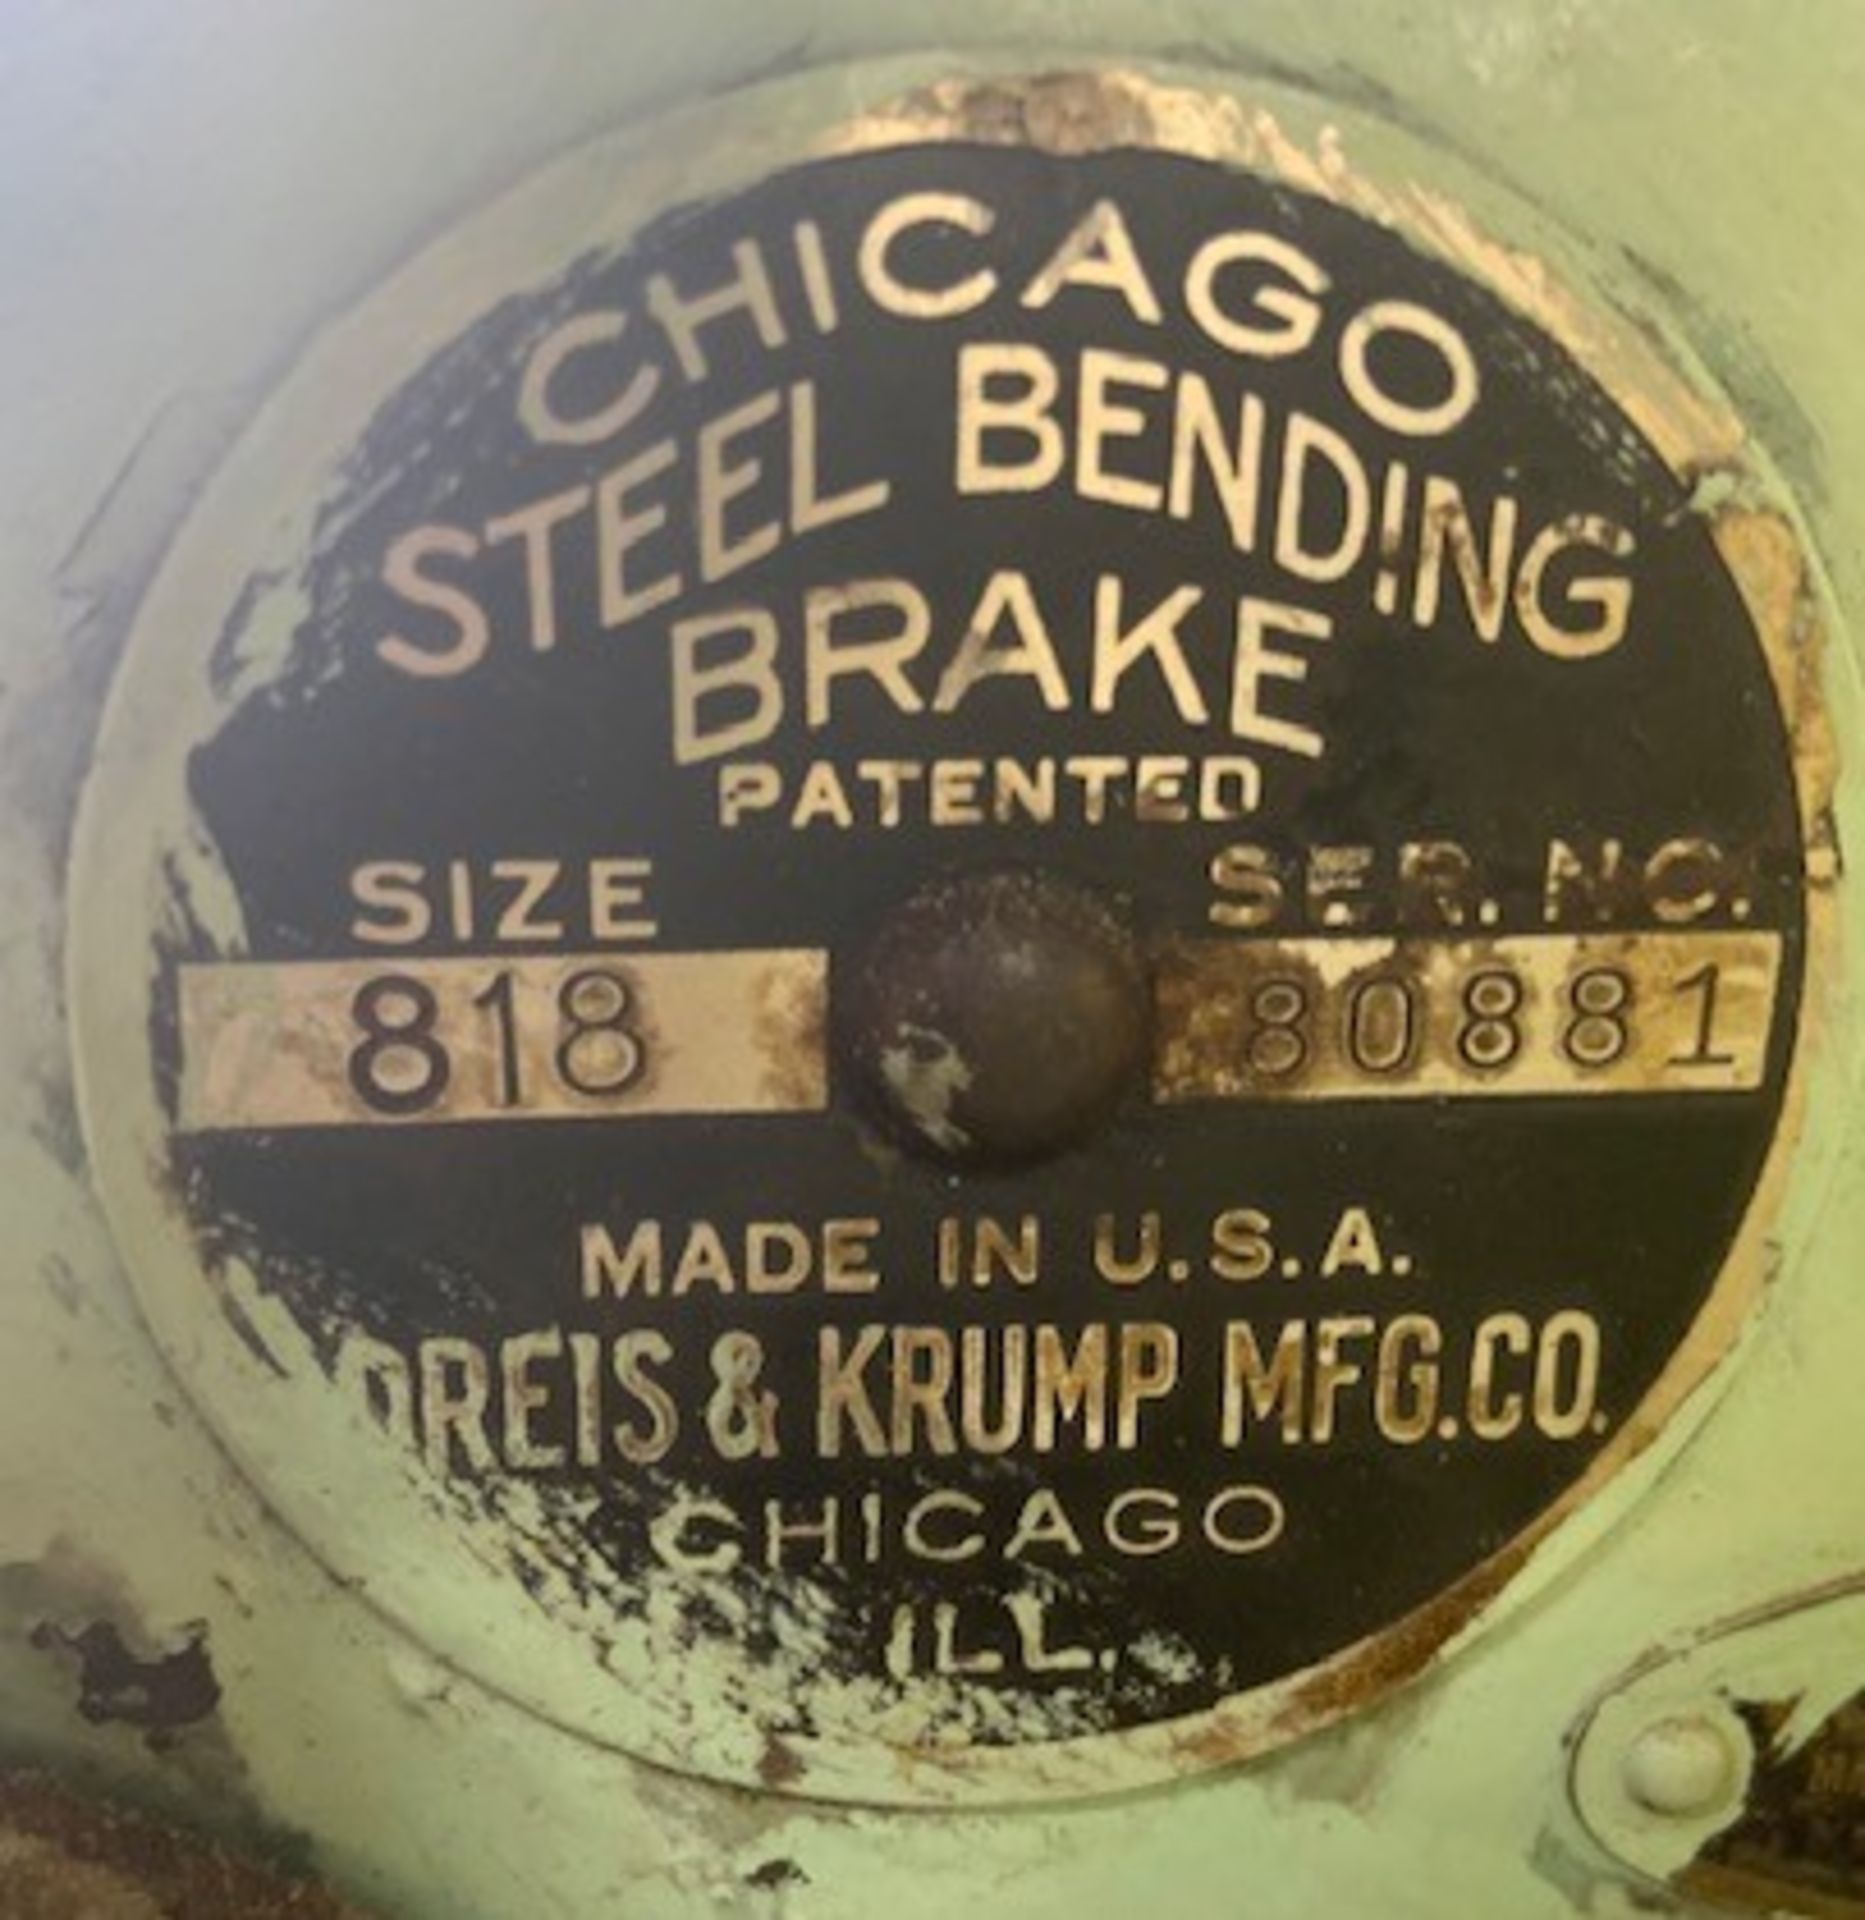 Chicago 8' Brake, Size 818 - Image 3 of 5